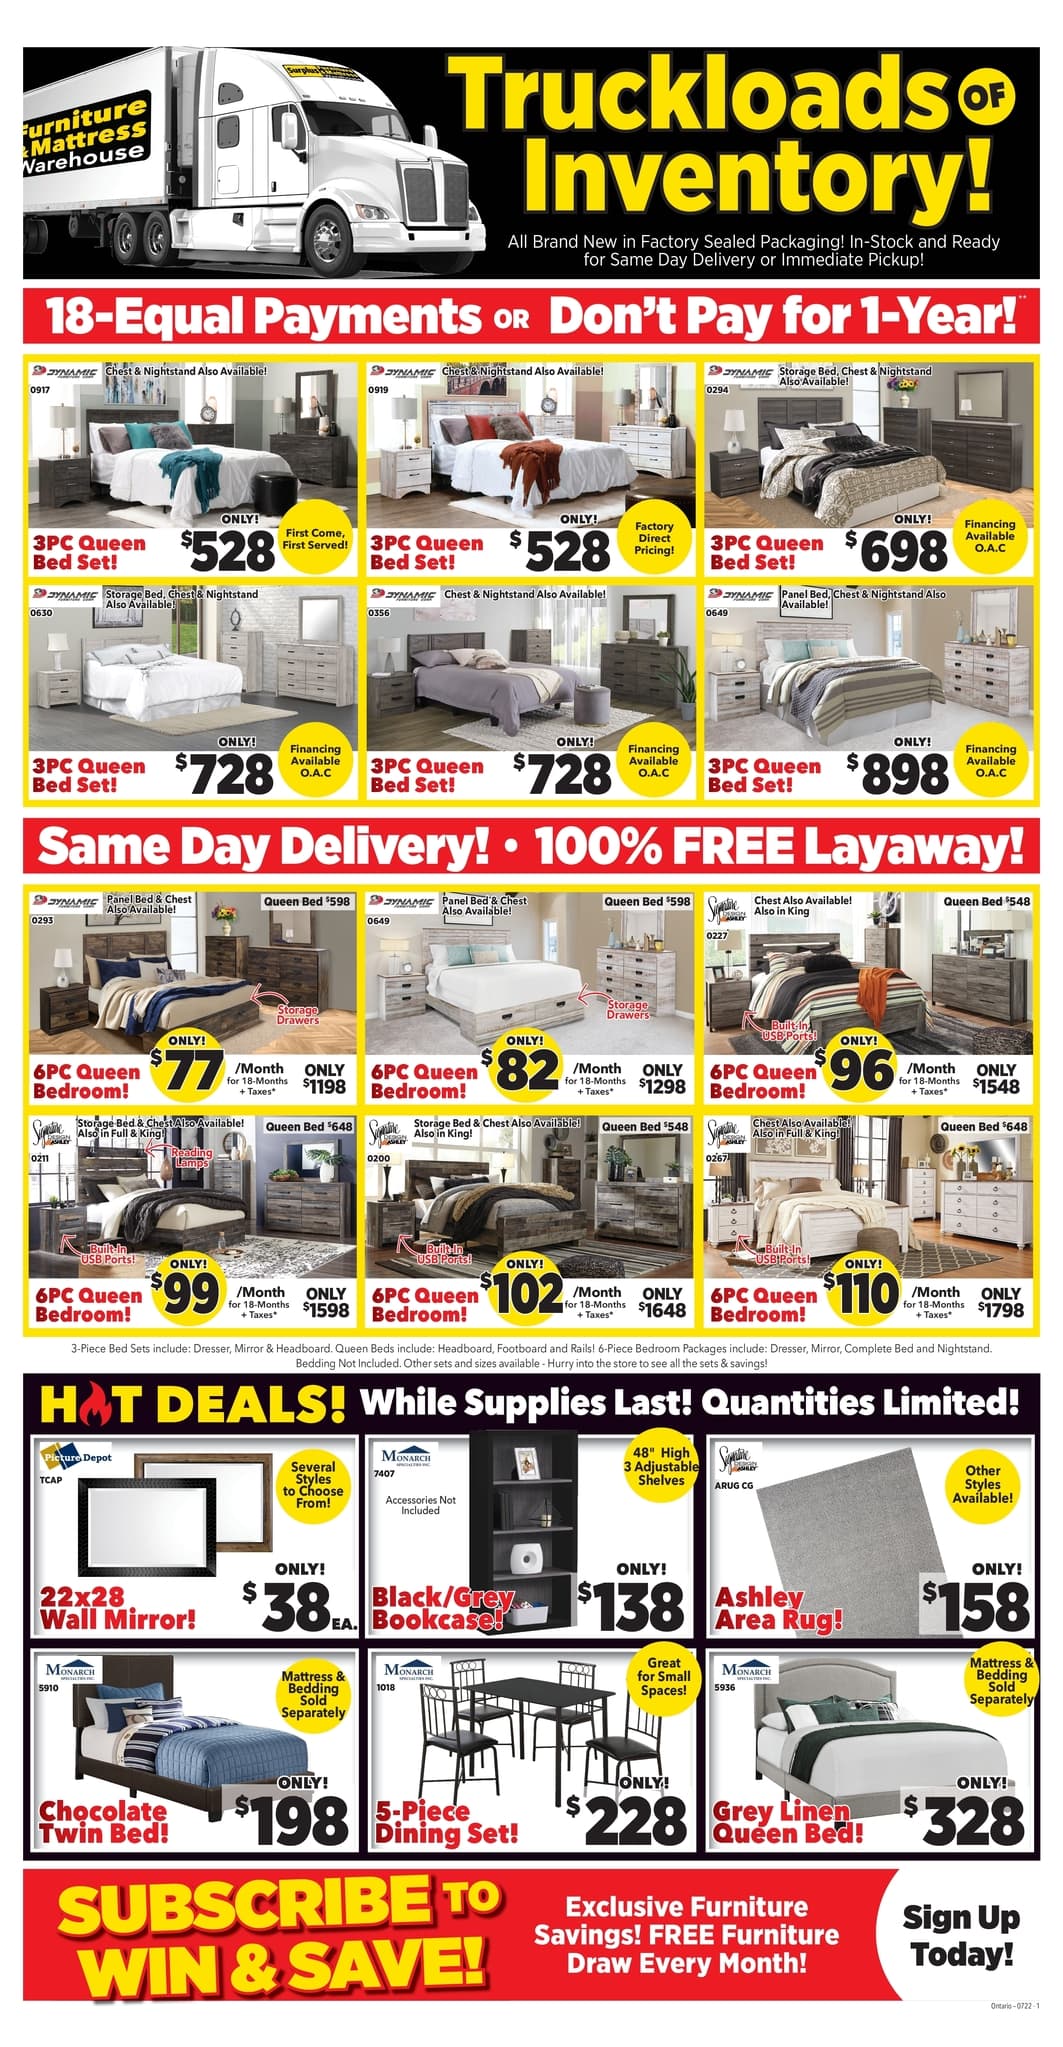 Surplus Furniture & Mattress Warehouse - Weekly Flyer Specials - Page 3